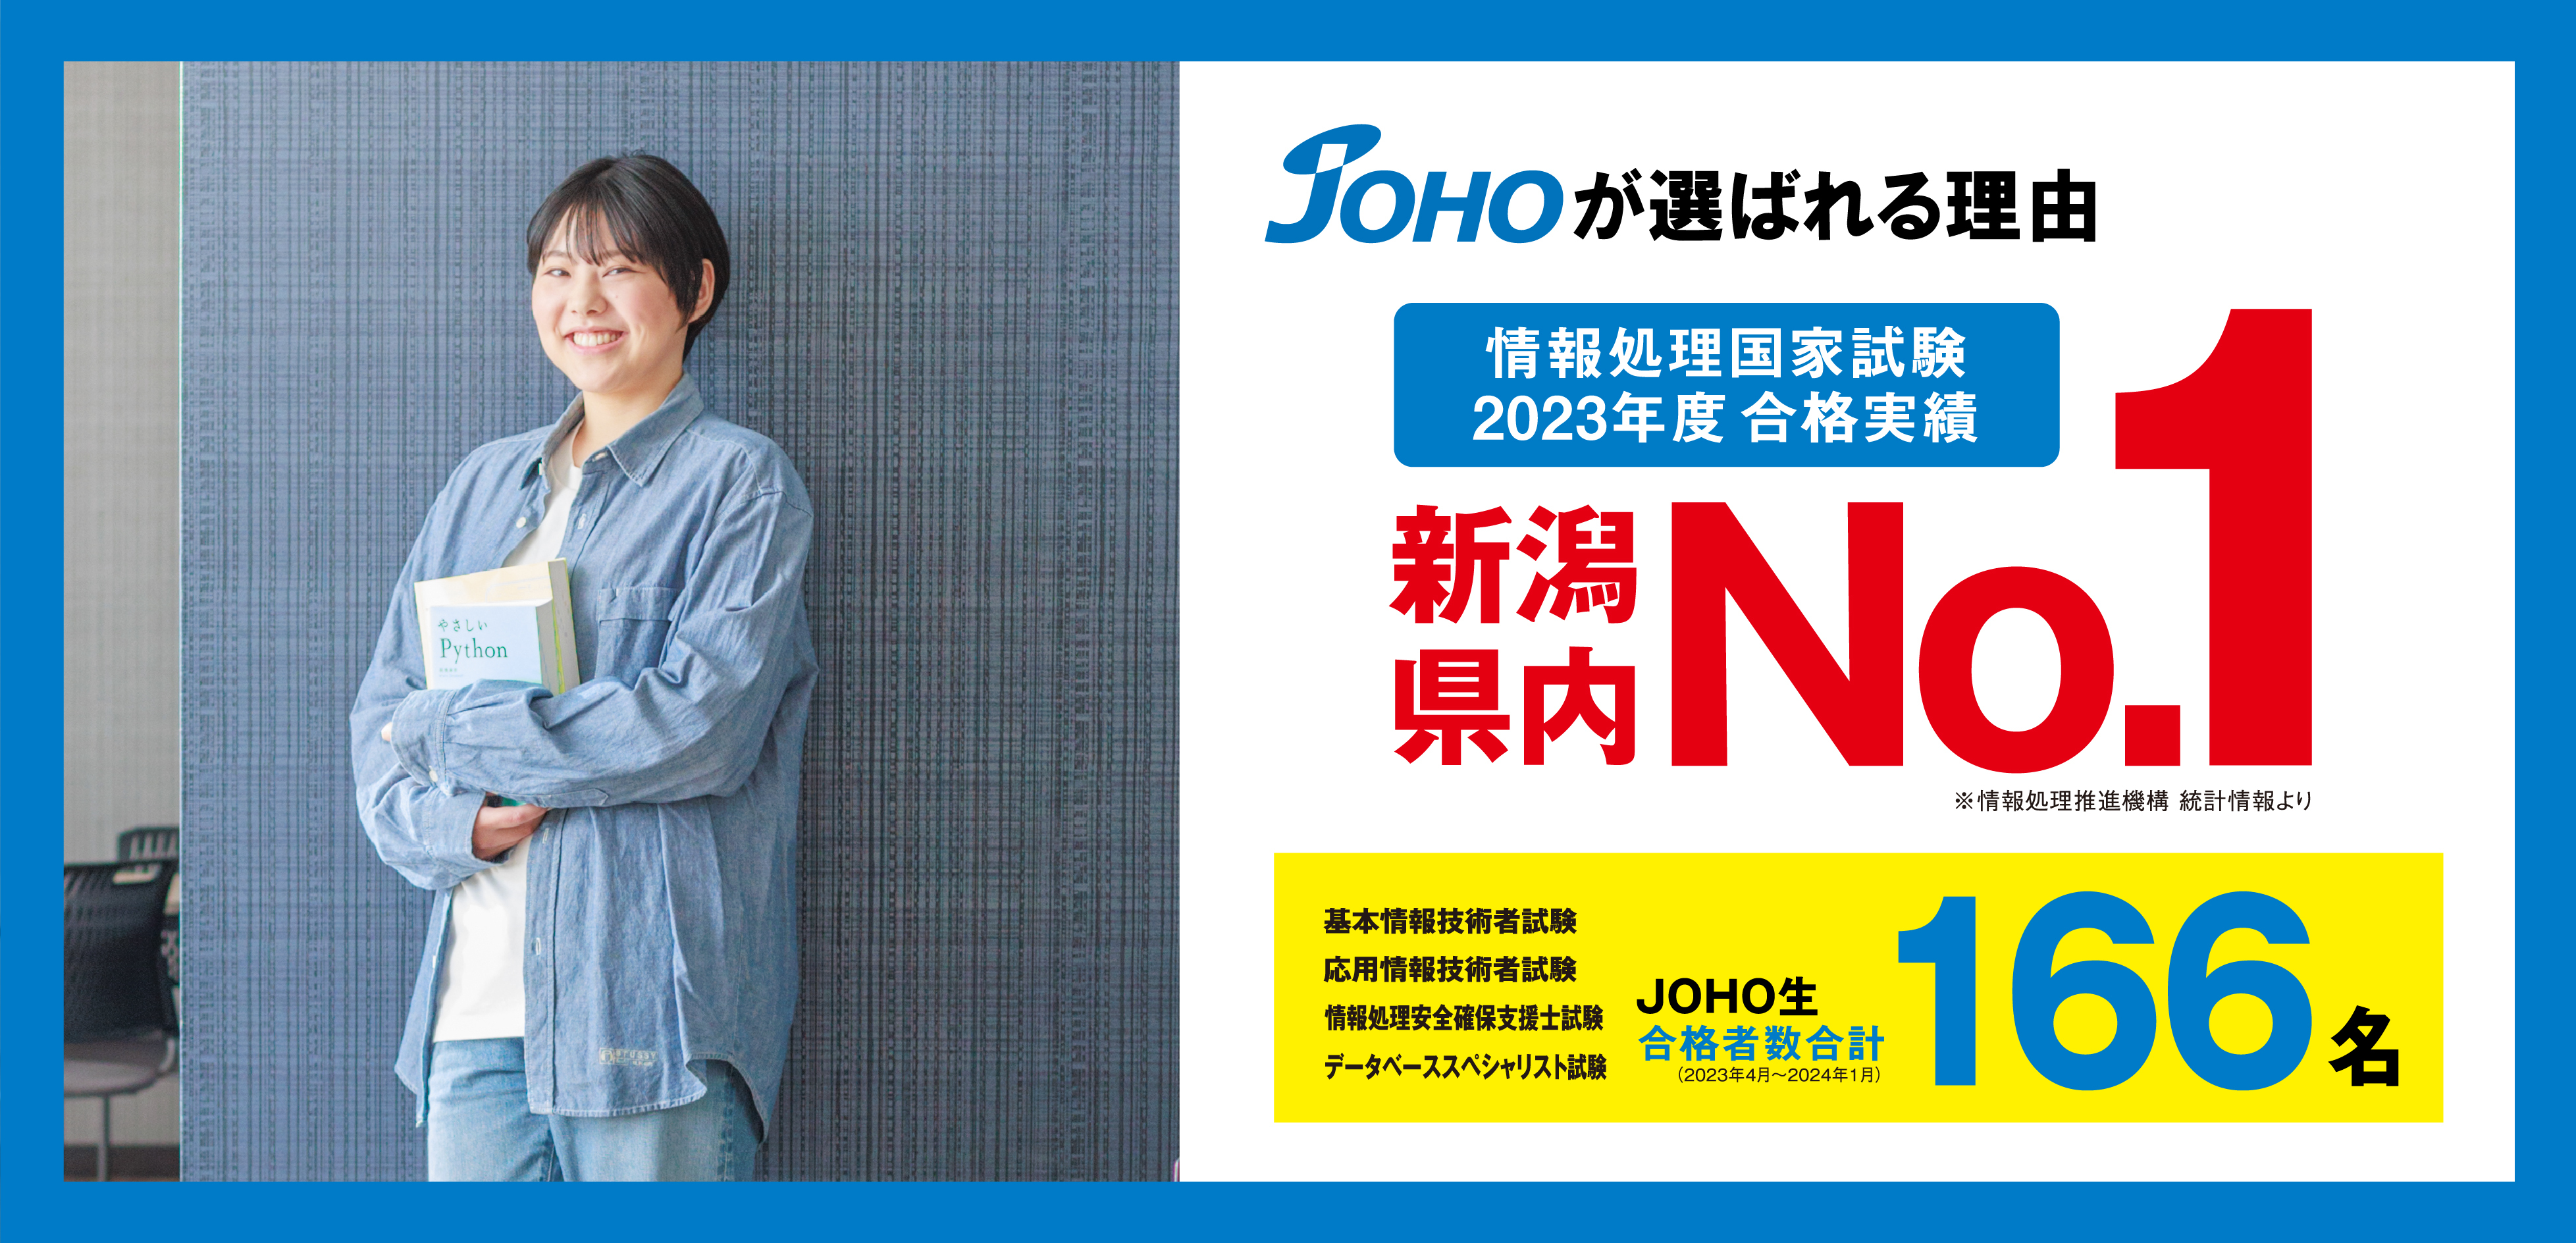 JOHO新潟情報専門学校は資格に強い(2024年)